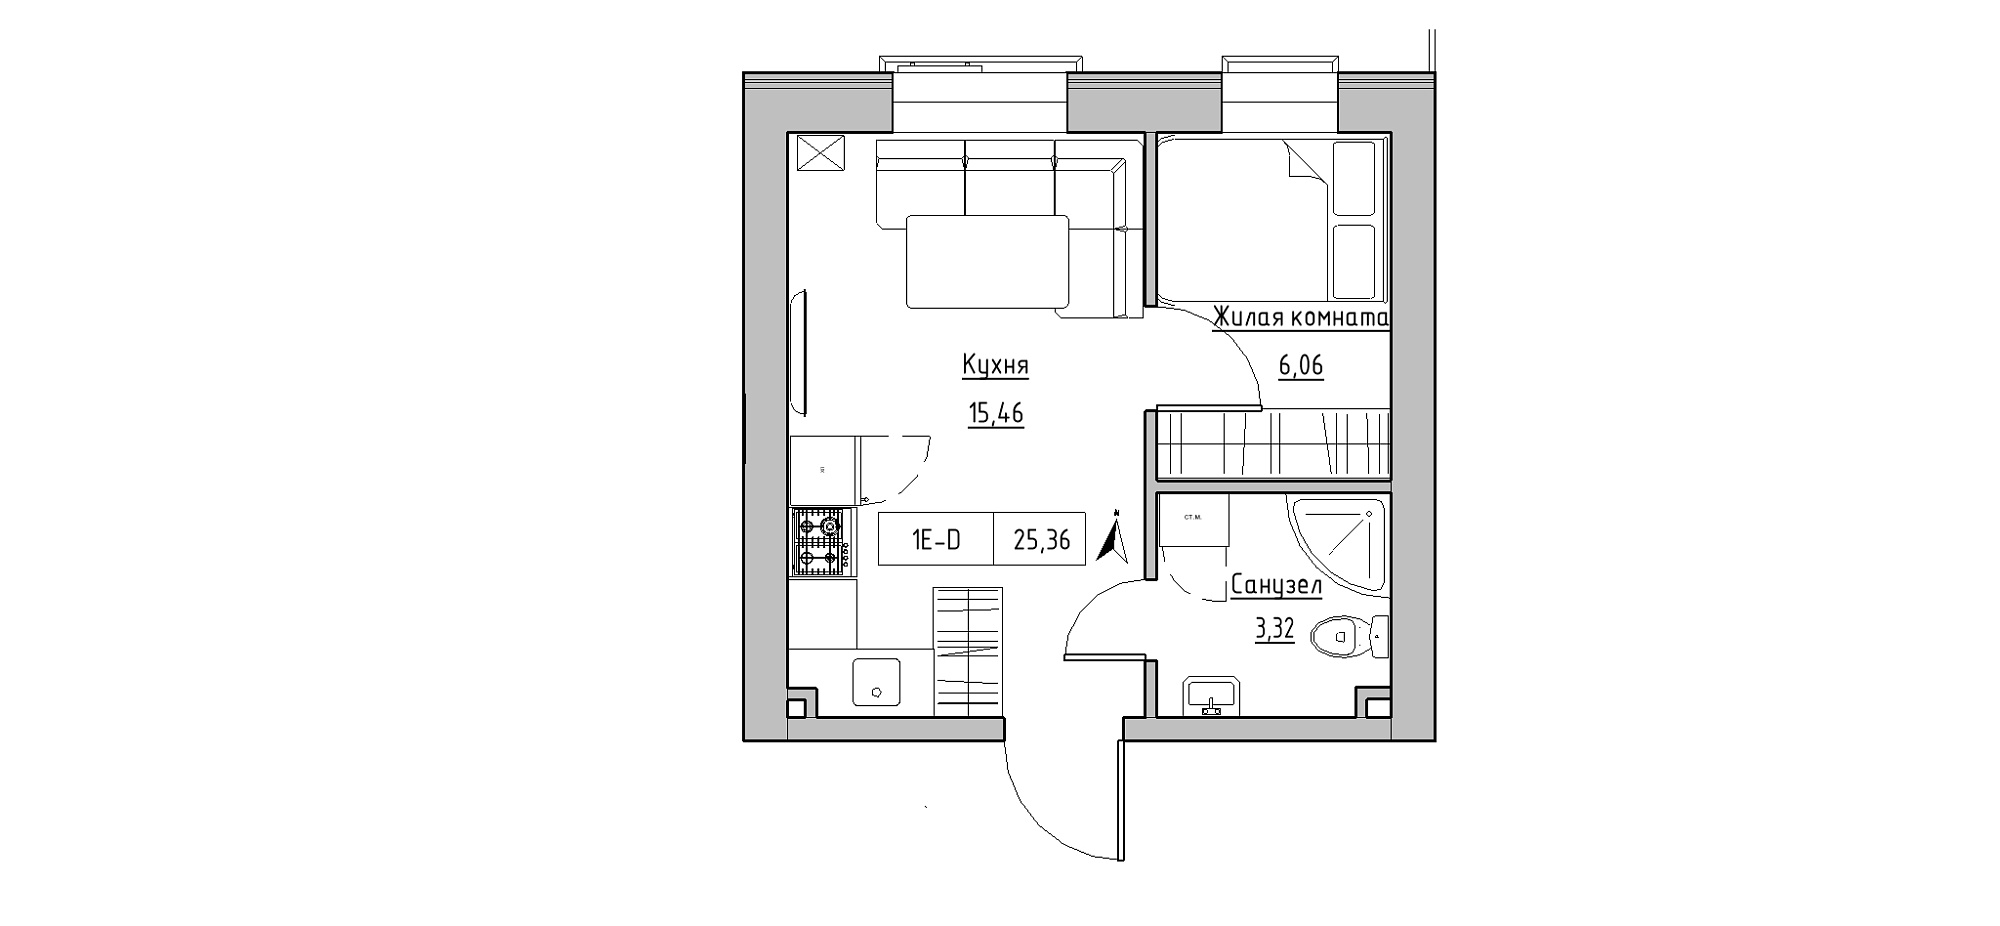 Planning 1-rm flats area 25.36m2, KS-020-05/0002.